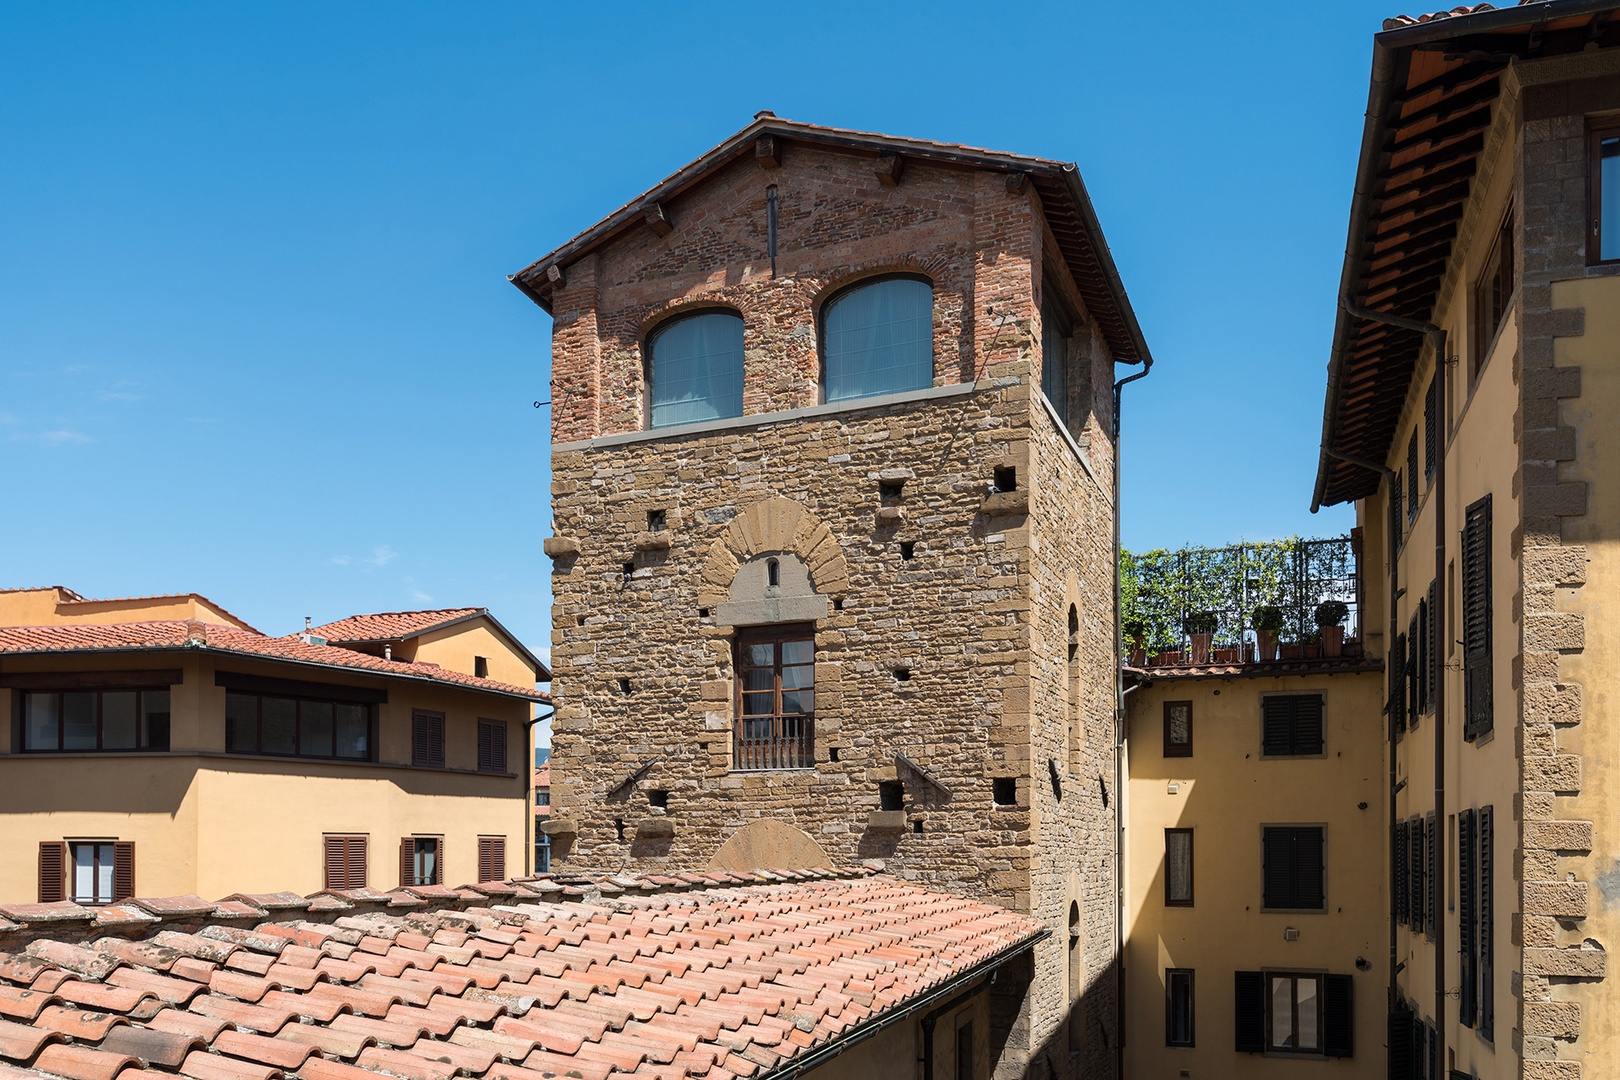 Tower of the Ponte Vecchio